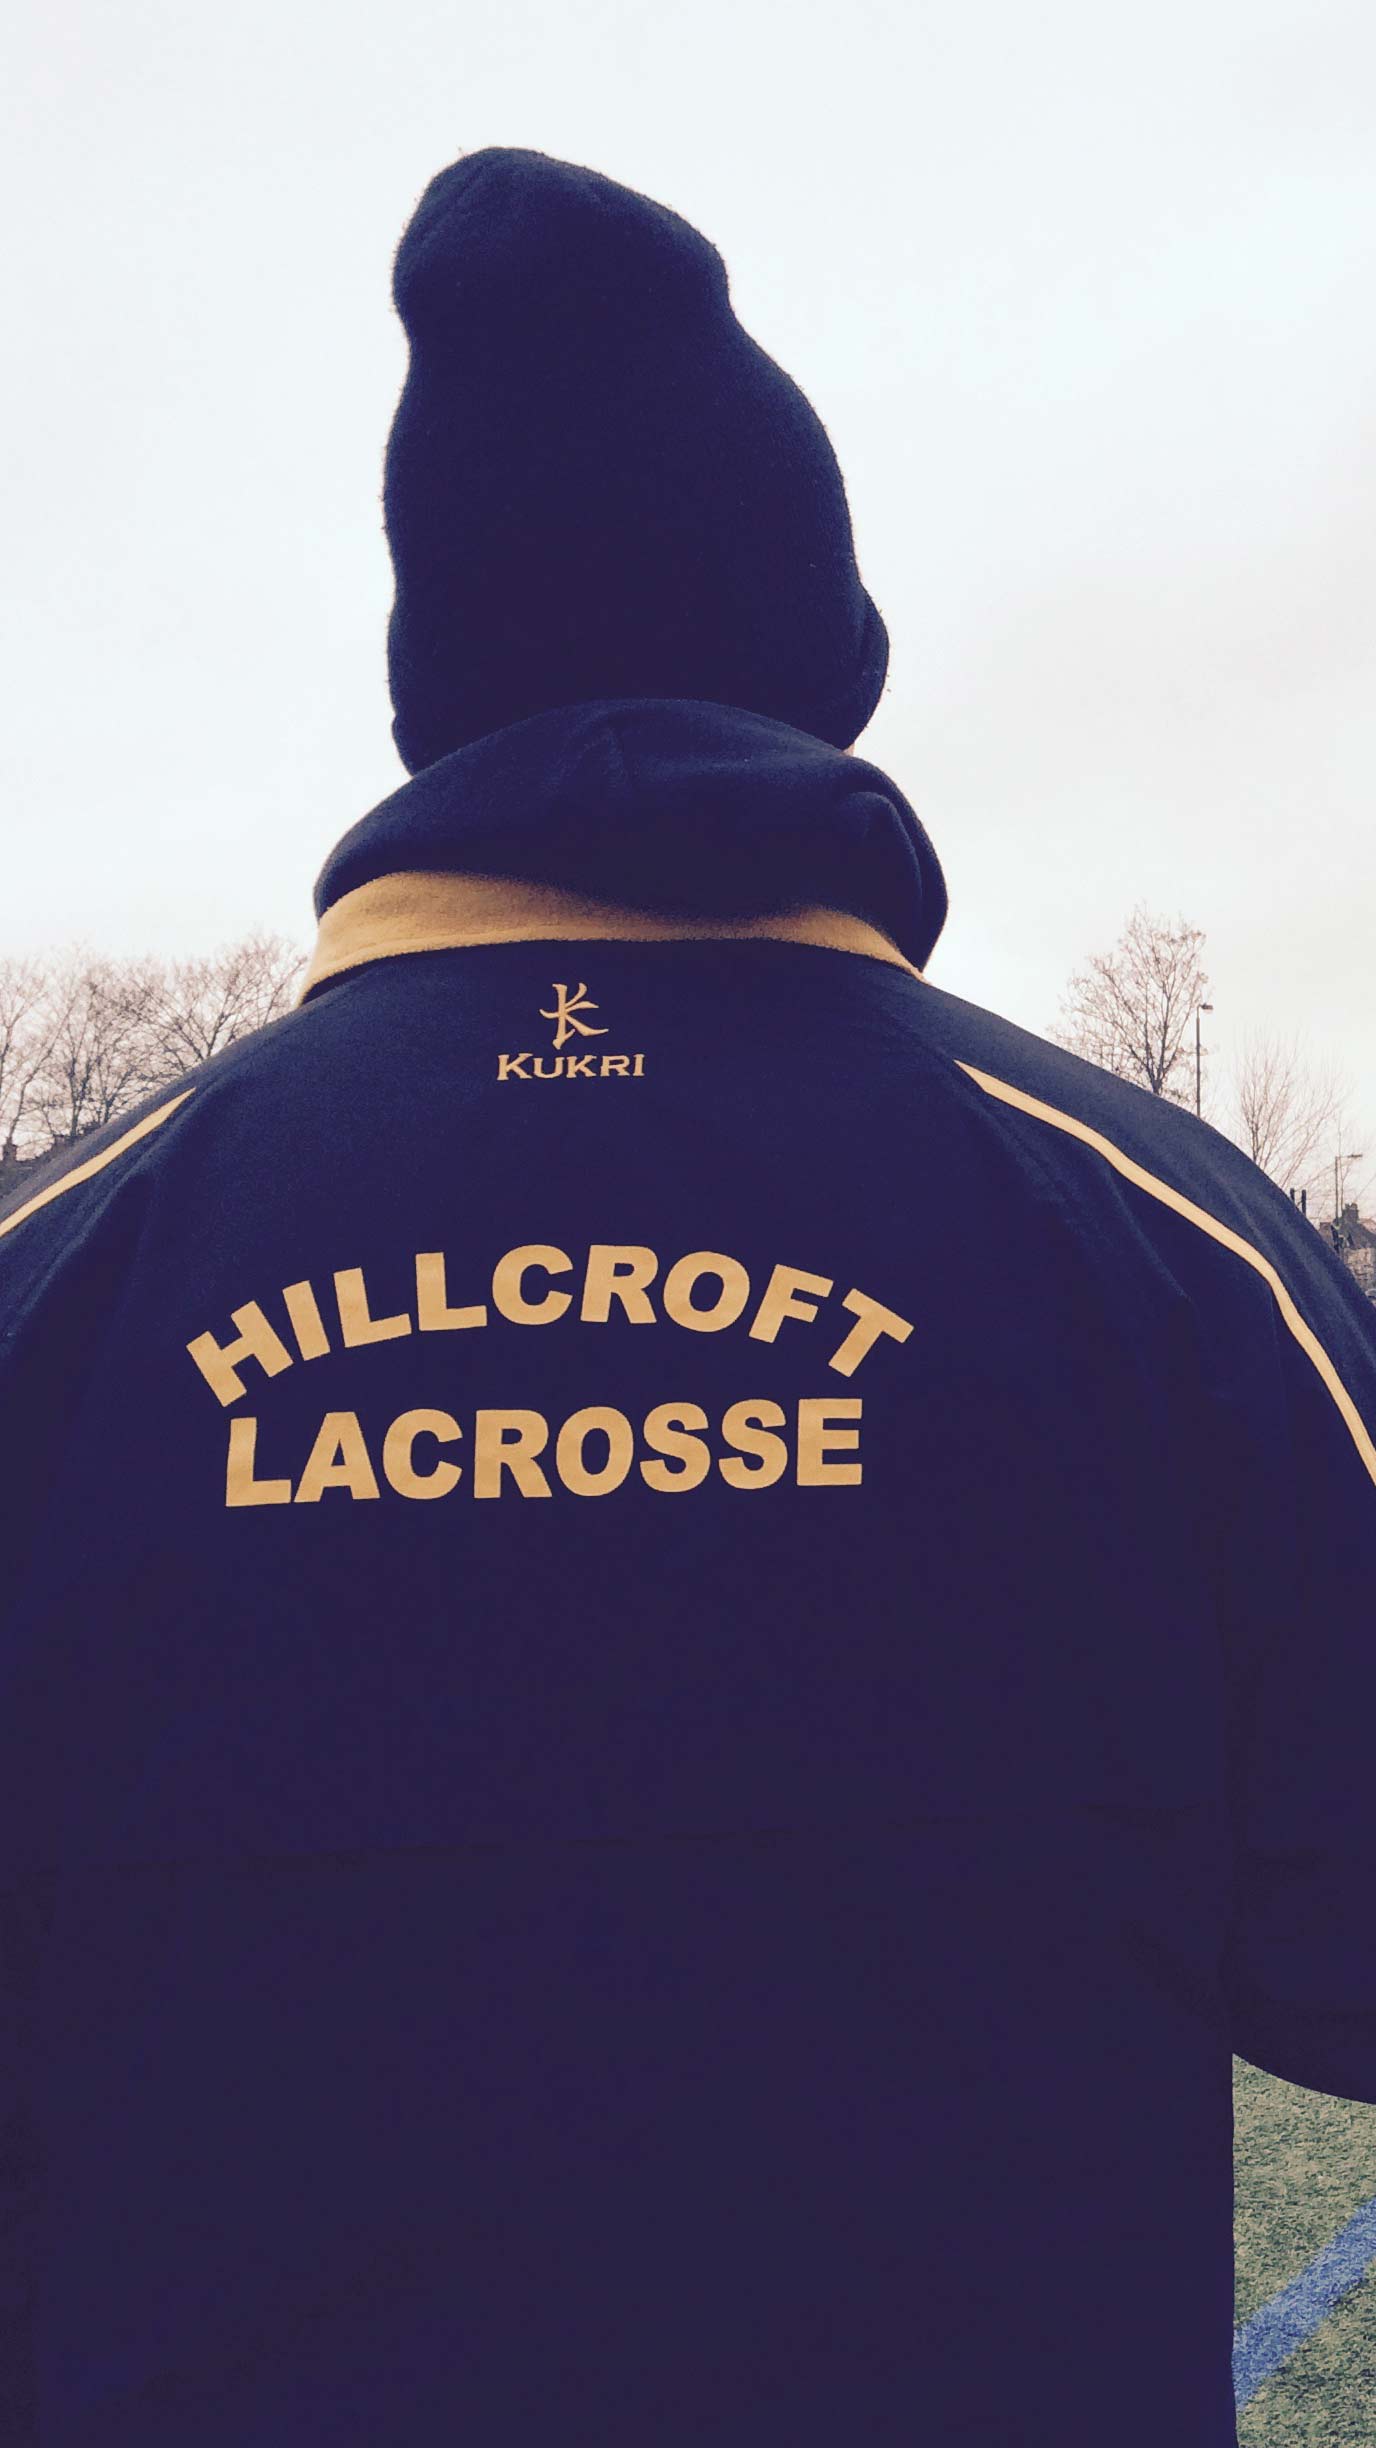 Hillcroft Lacrosse London Club Intro